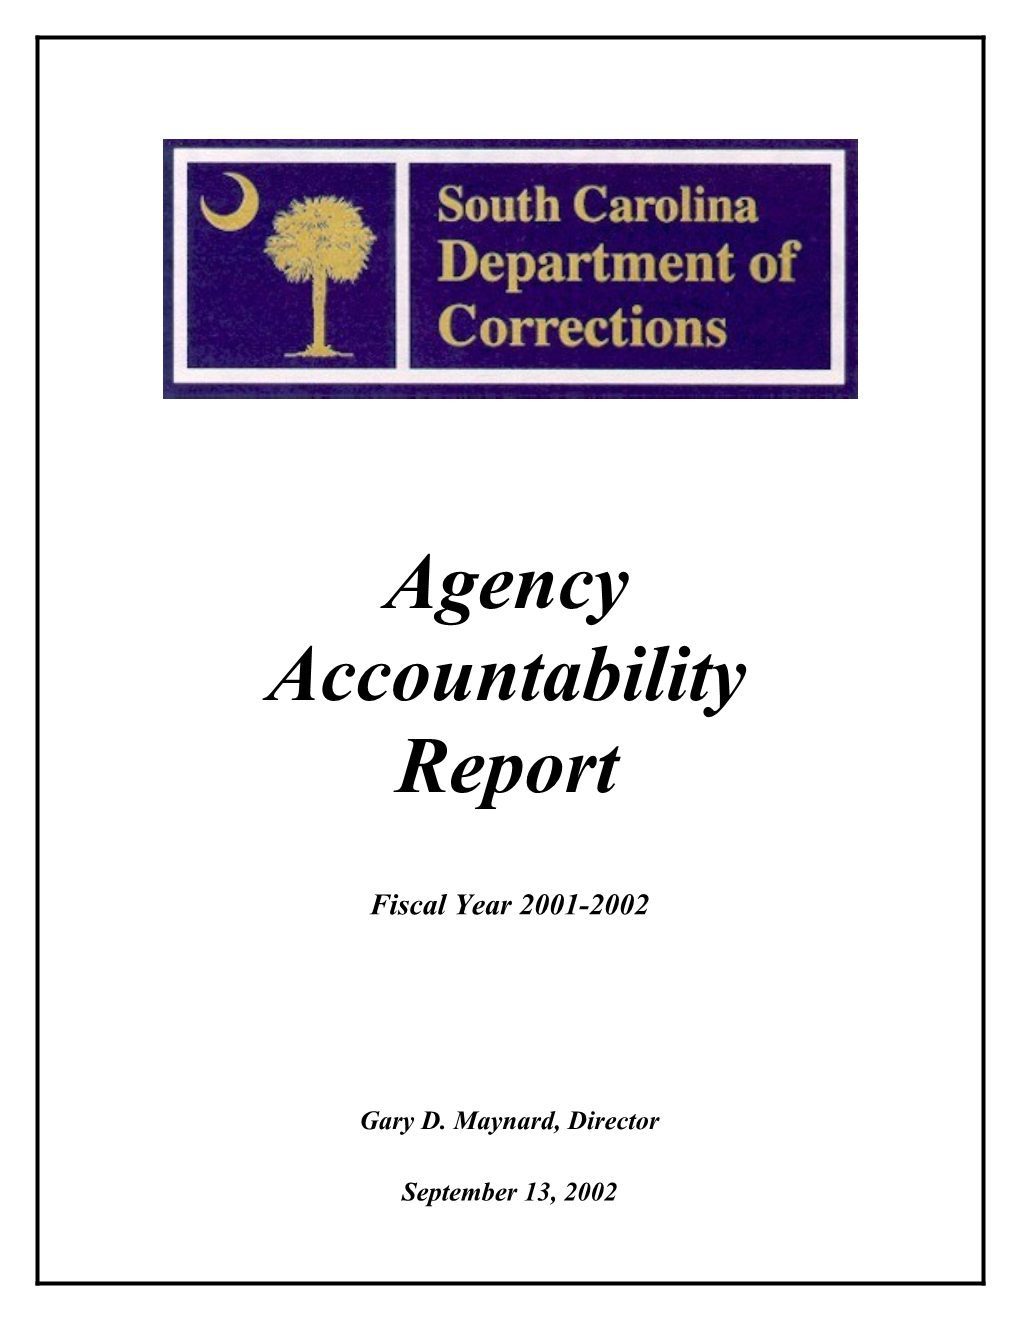 2002 Agency Accountability Report